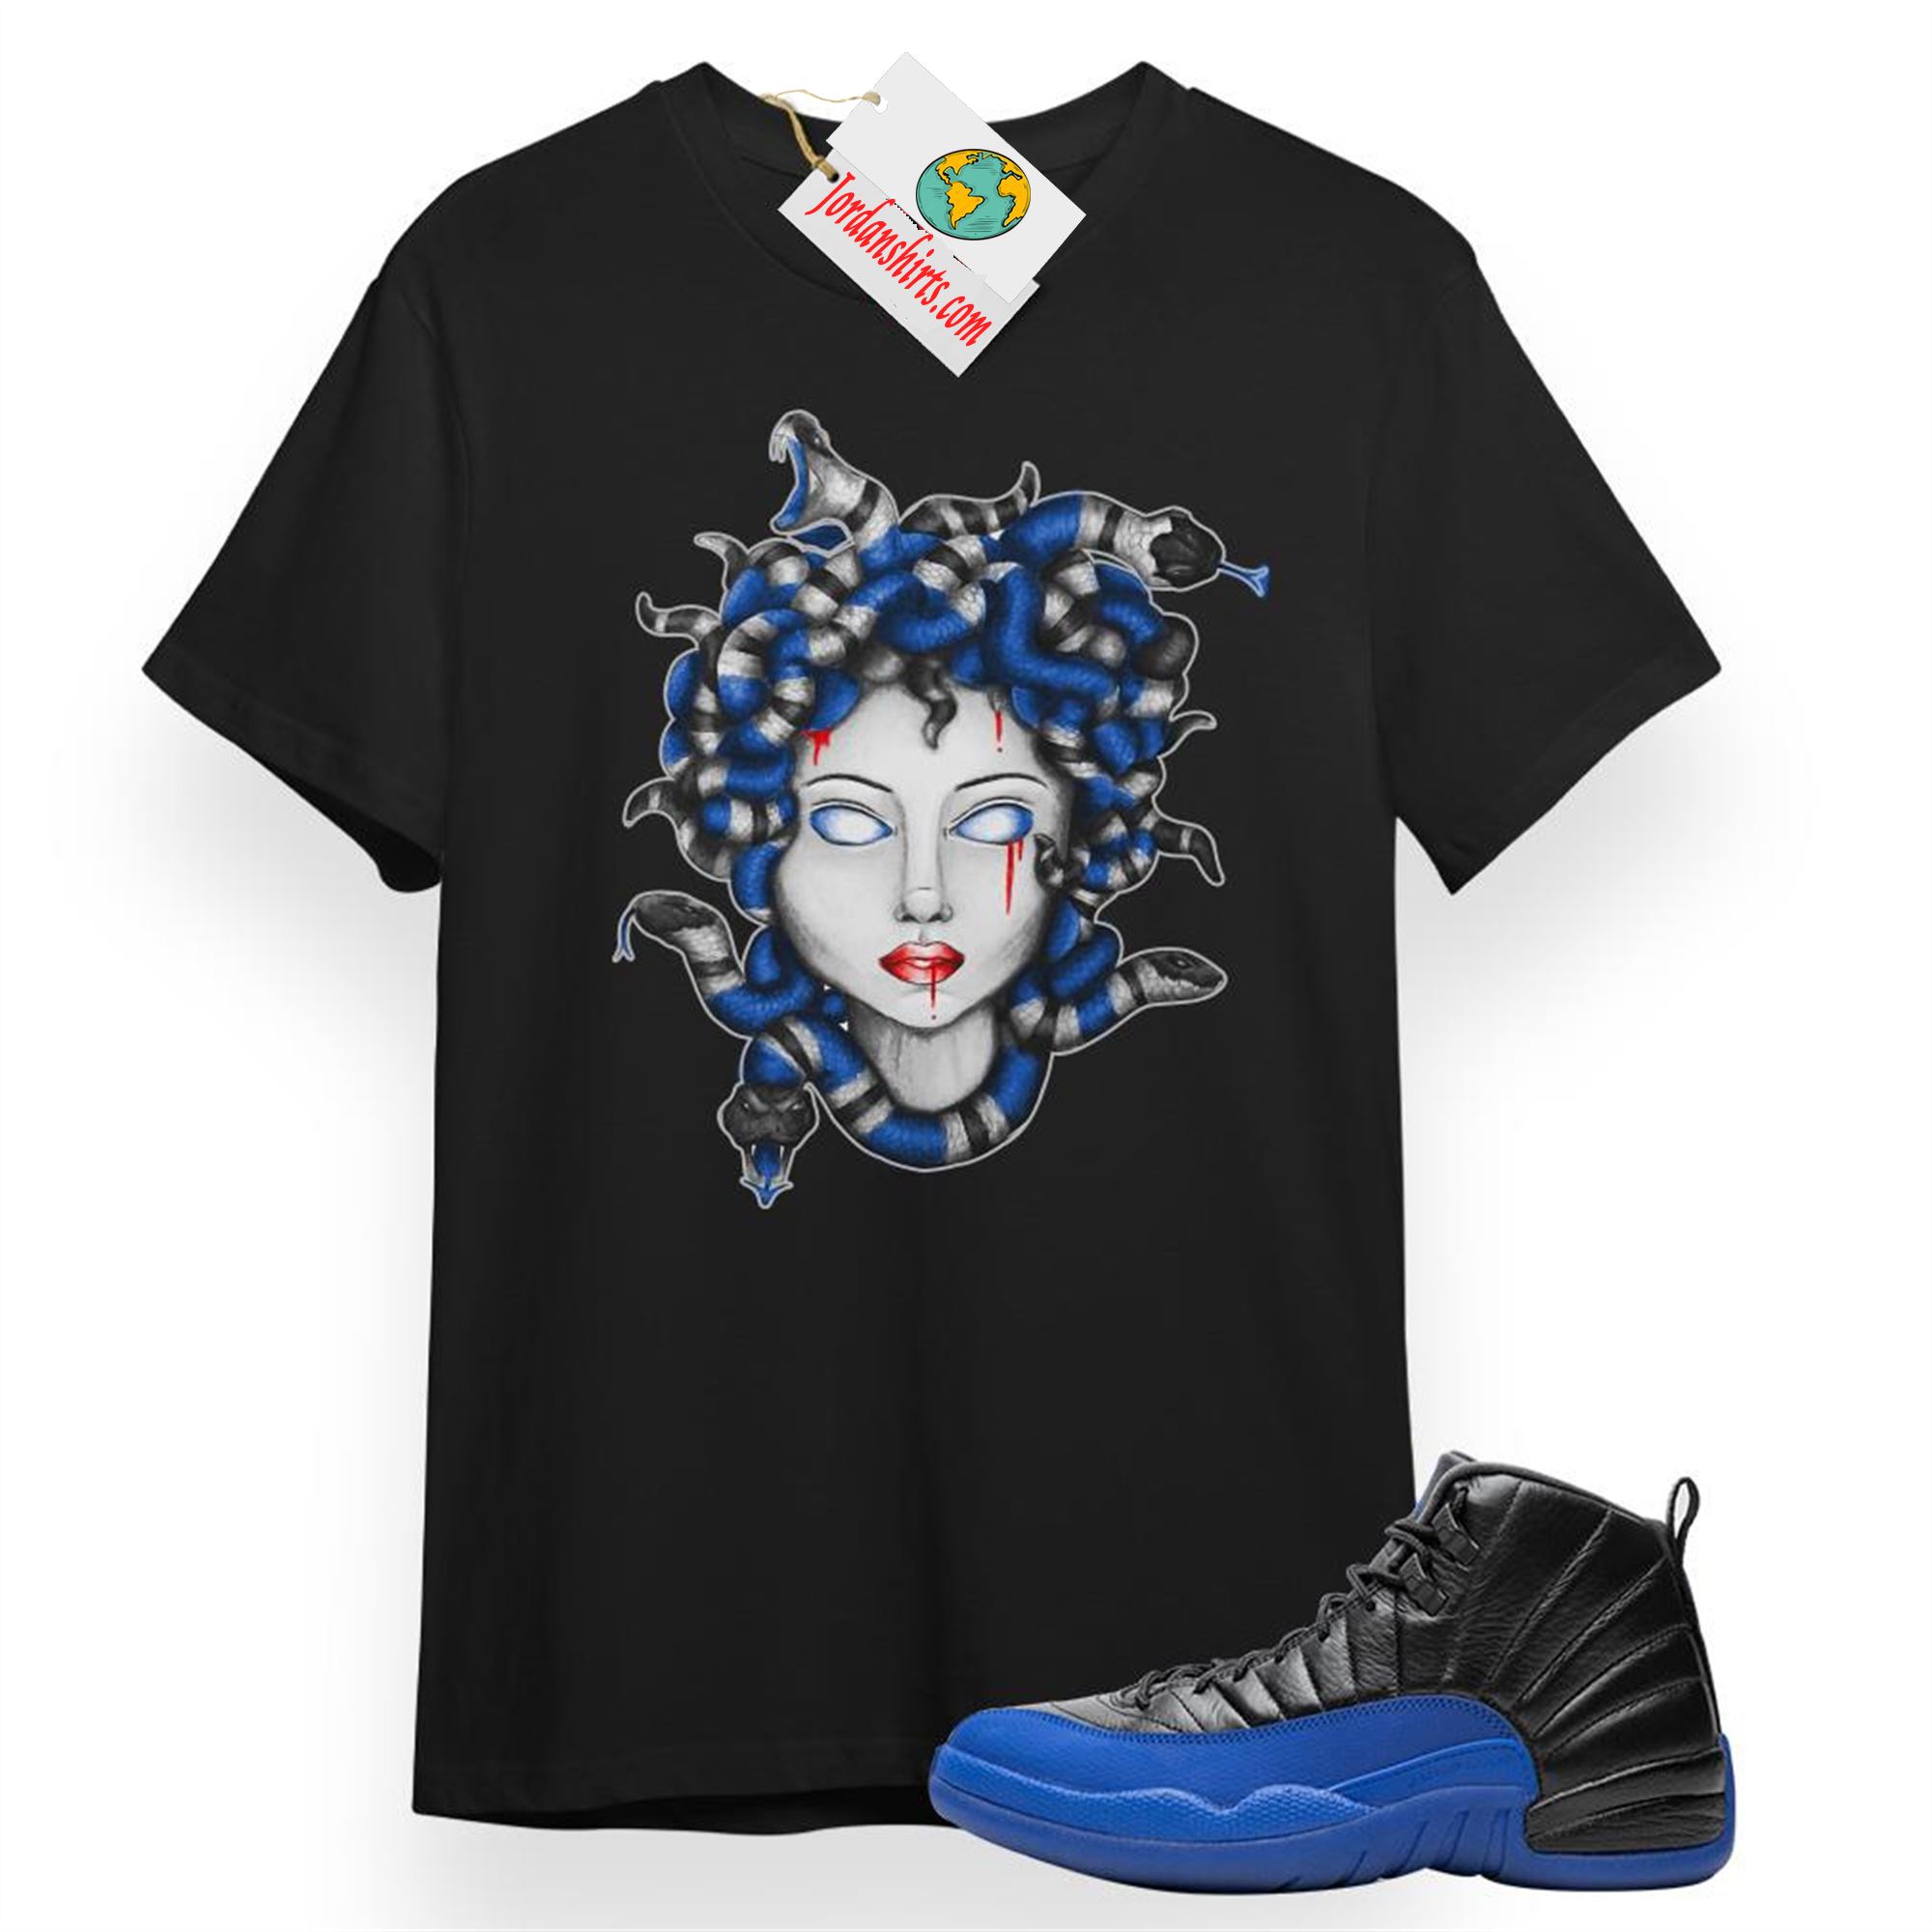 Jordan 12 Shirt, Medusa Snake Black T-shirt Air Jordan 12 Game Royal 12s Size Up To 5xl